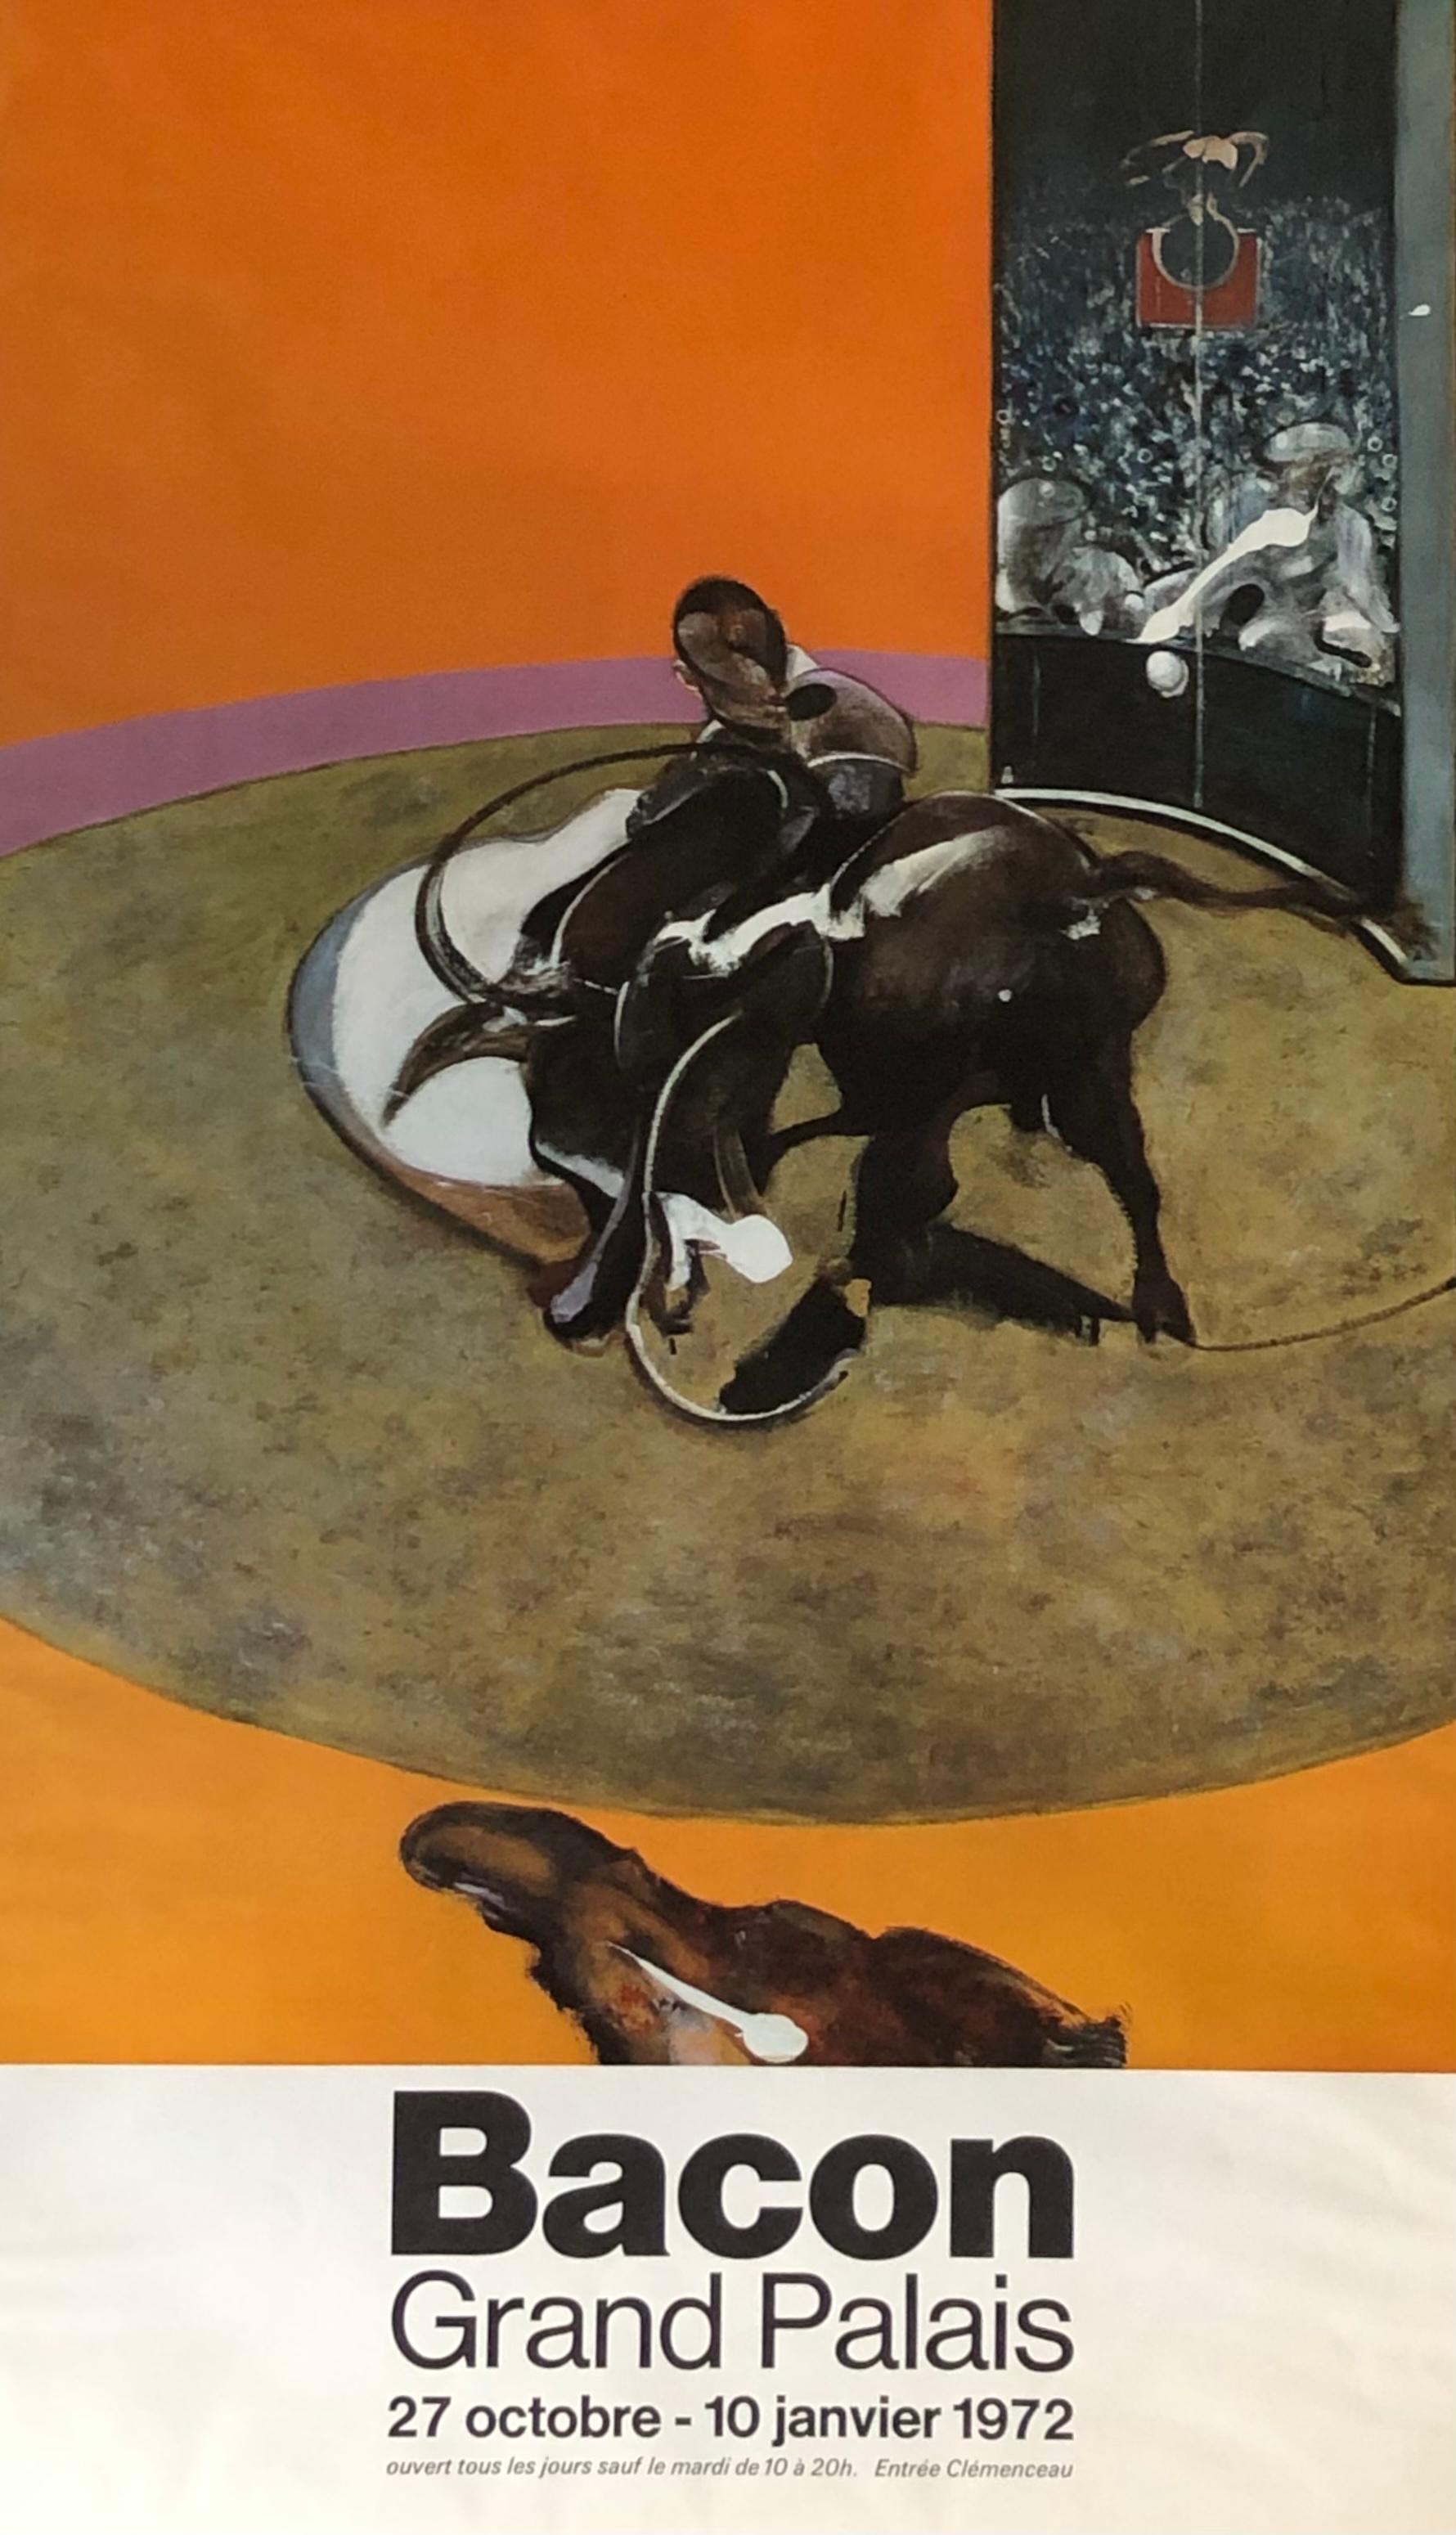 Francis Bacon exhibition poster 1970s